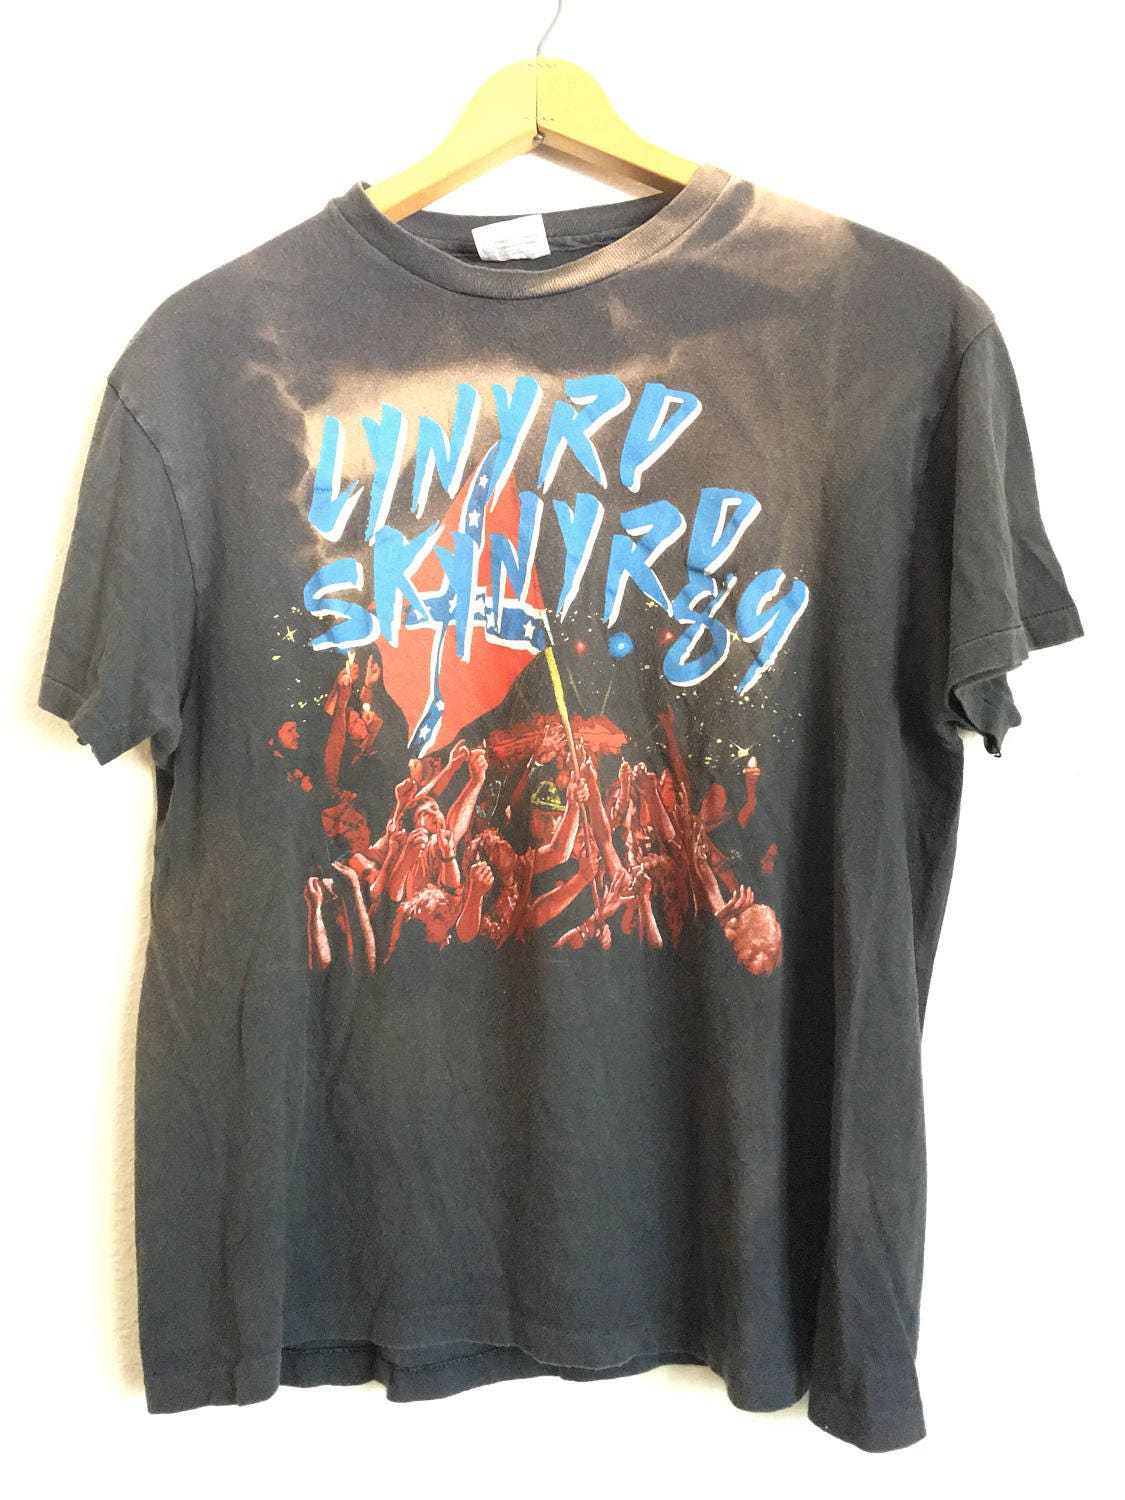 1989-1990 LYNYRD SKYNYRD Distressed Bleached Vintage T Shirt